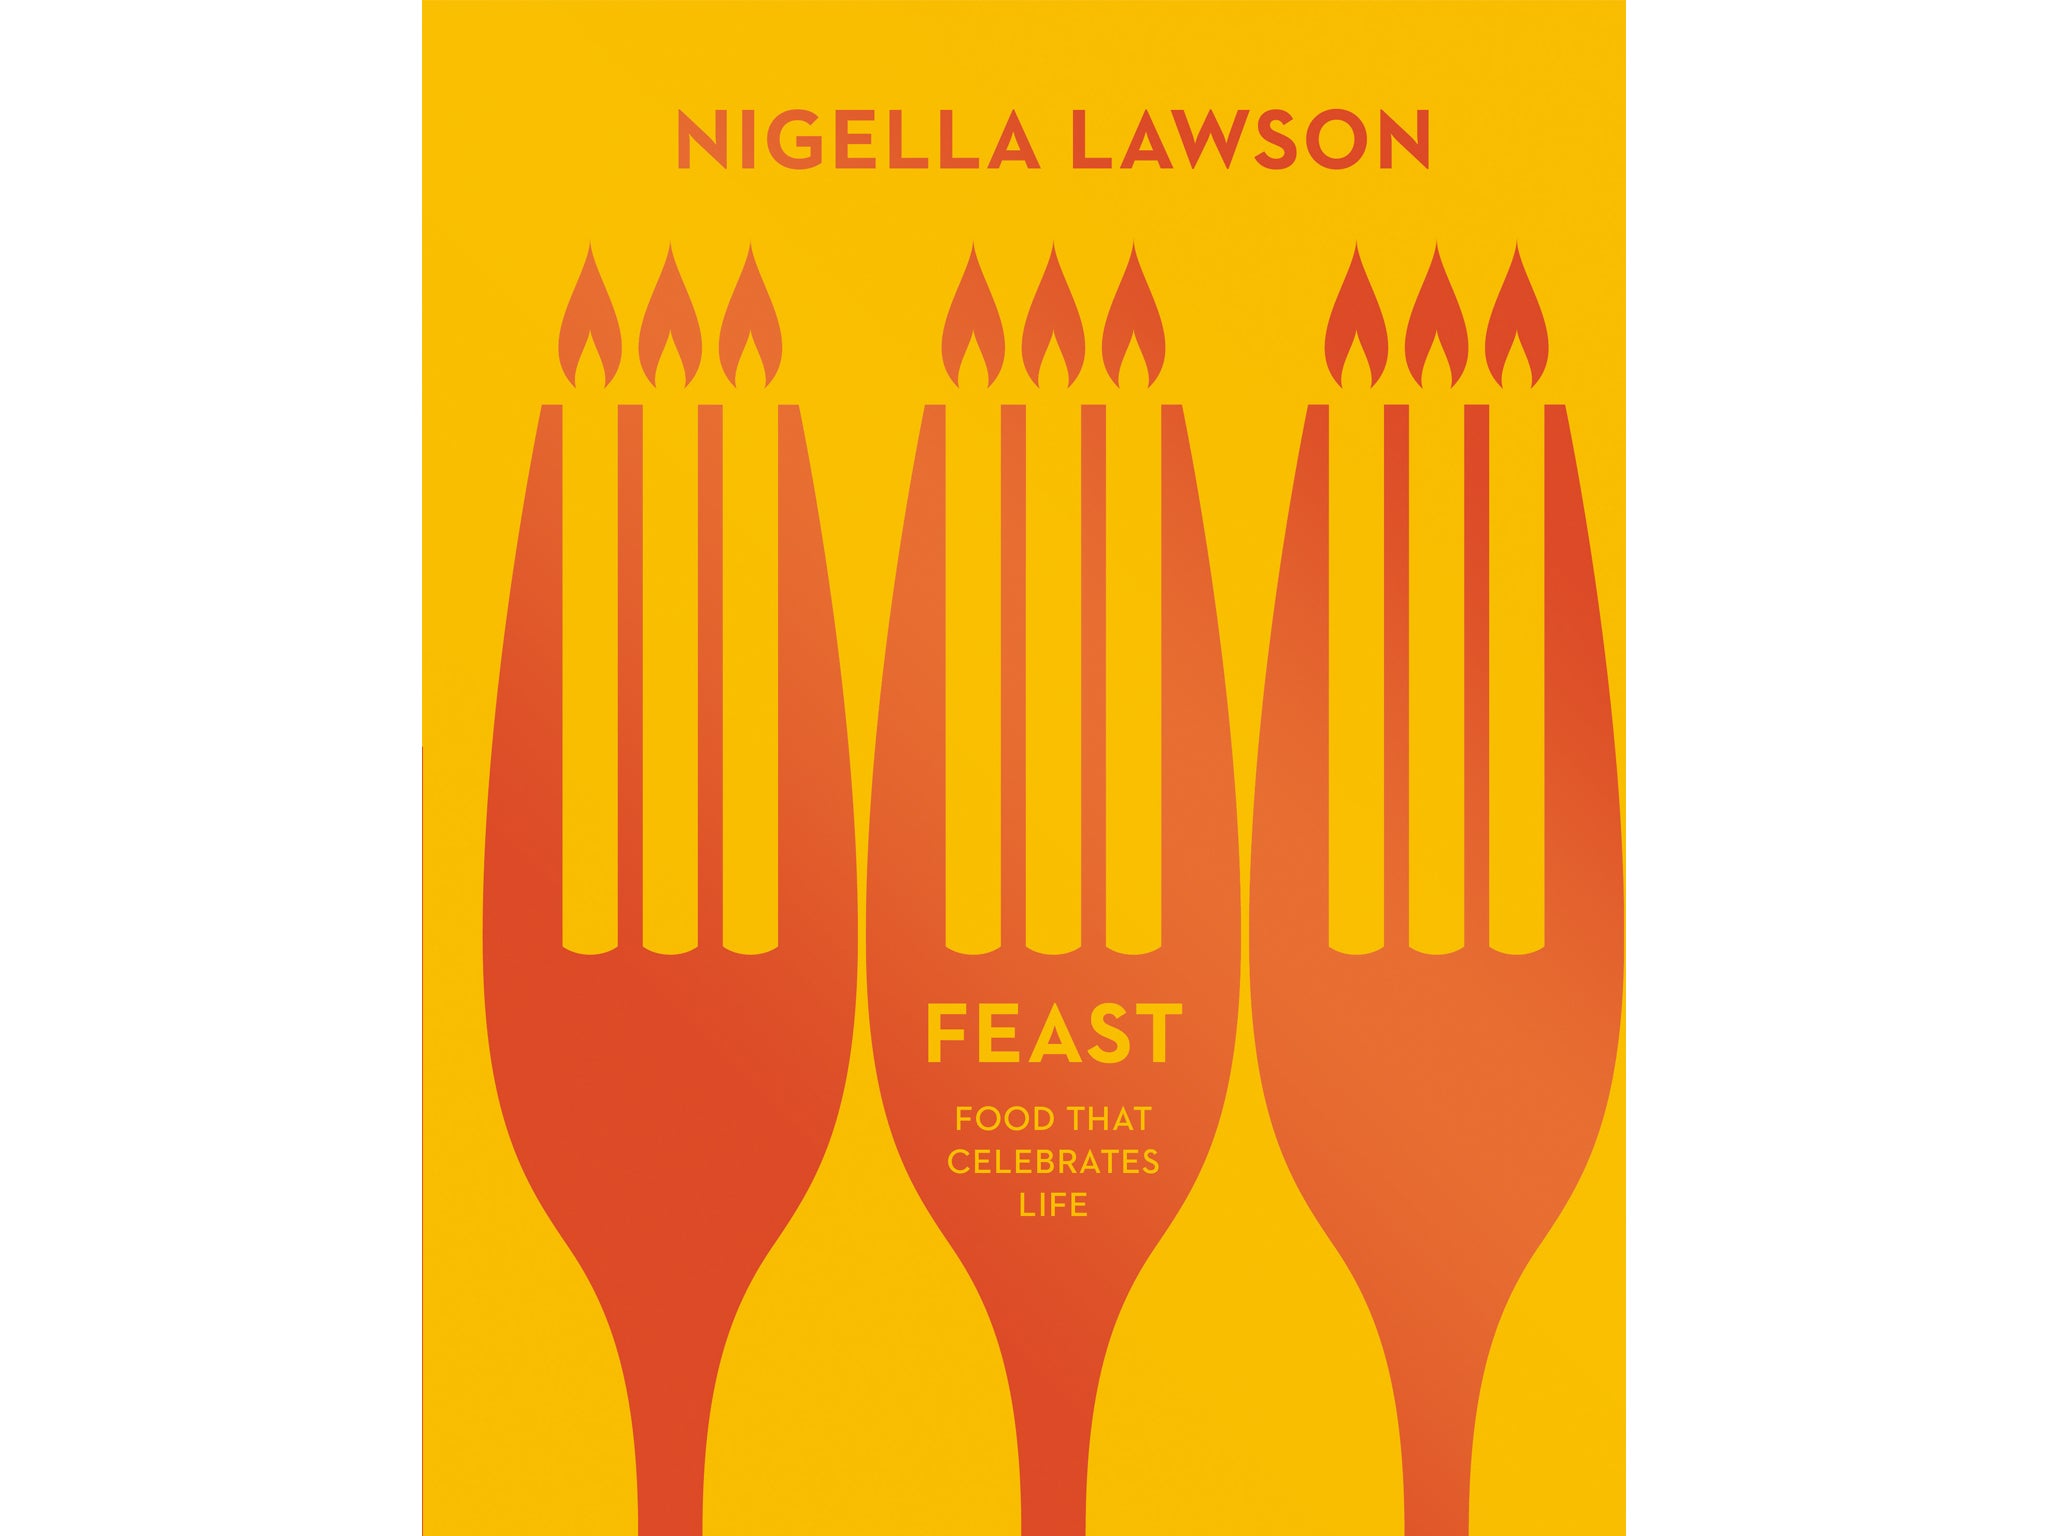 Feast - Nigella Lawson best cookbooks.jpg